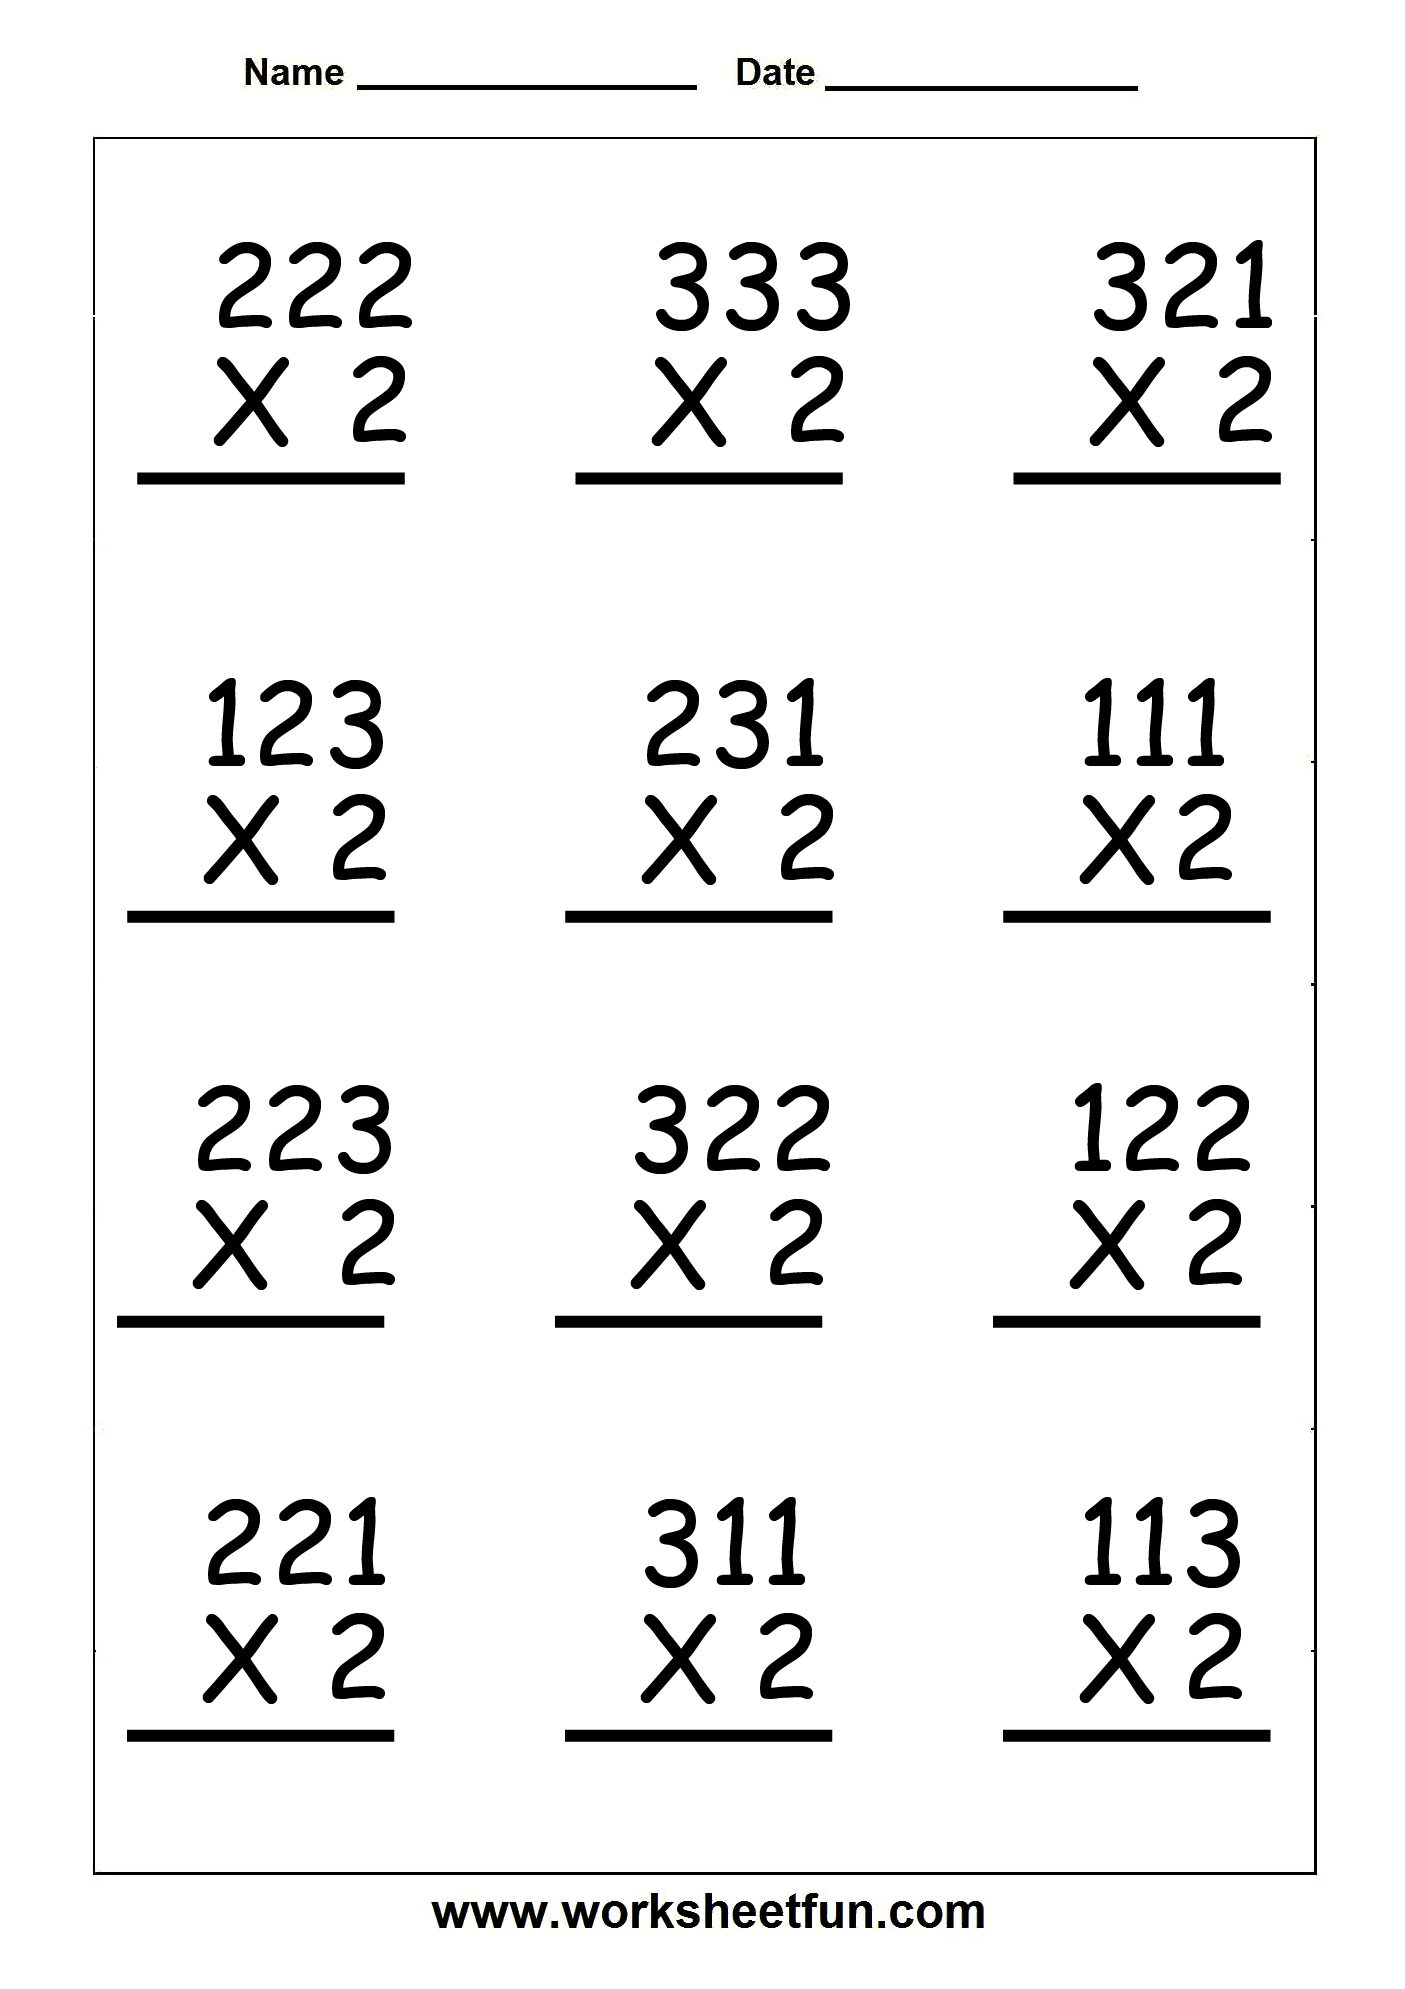 Copy Of Single Digit Multiplication Worksheets - Lessons regarding Multiplication Worksheets 3 Digit By 2 Digit